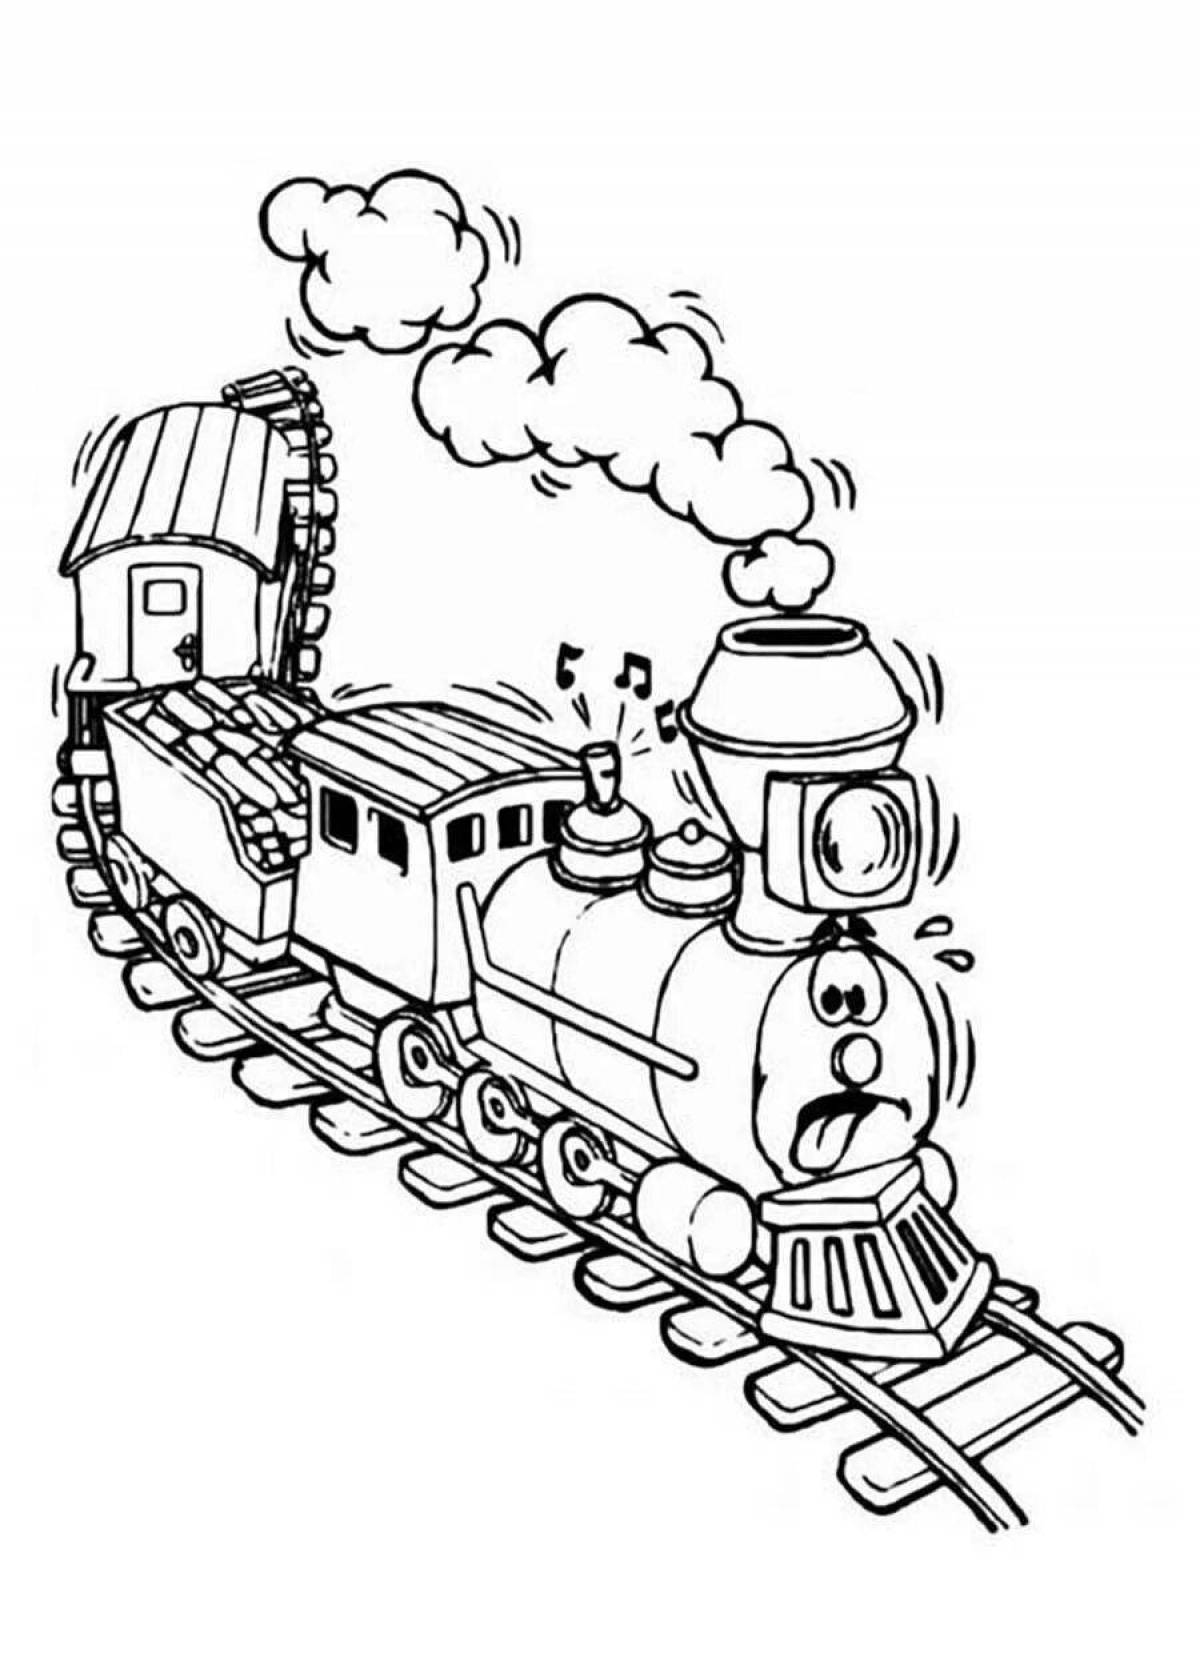 Colorful train illustration